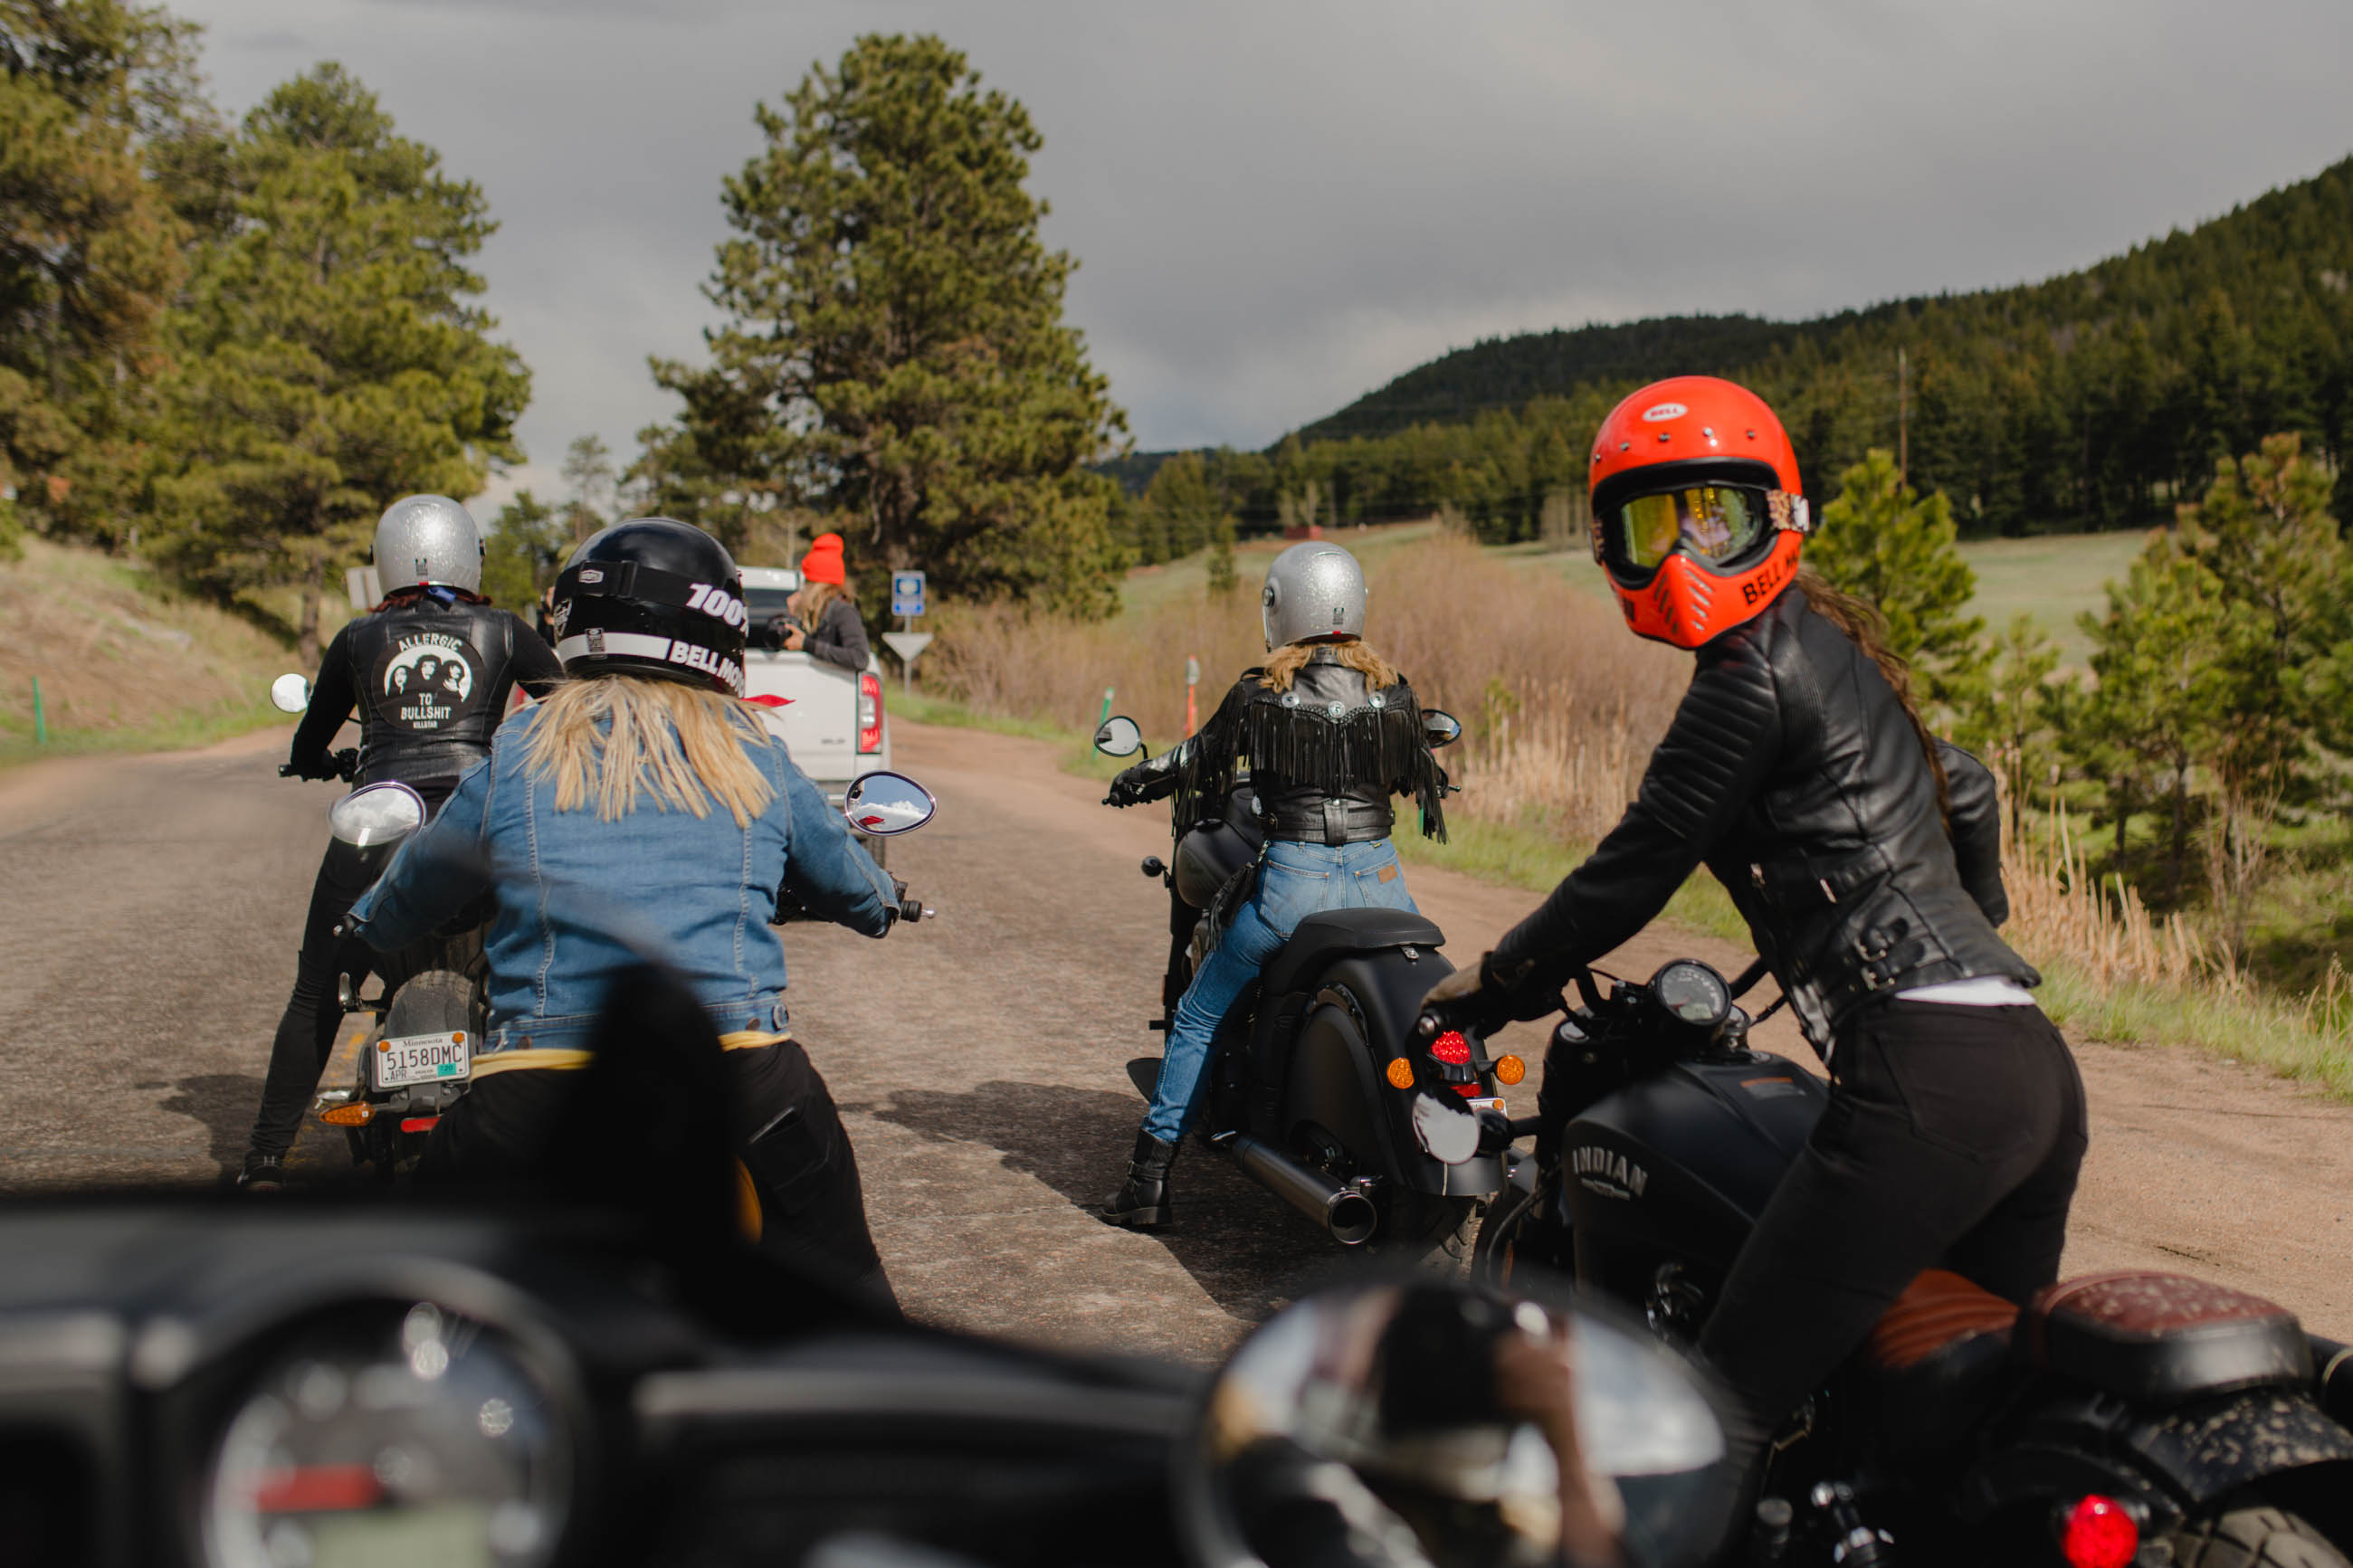 Women Motorcycle Rally Bike Makers Target Babes, Wild Gypsy Bloomberg